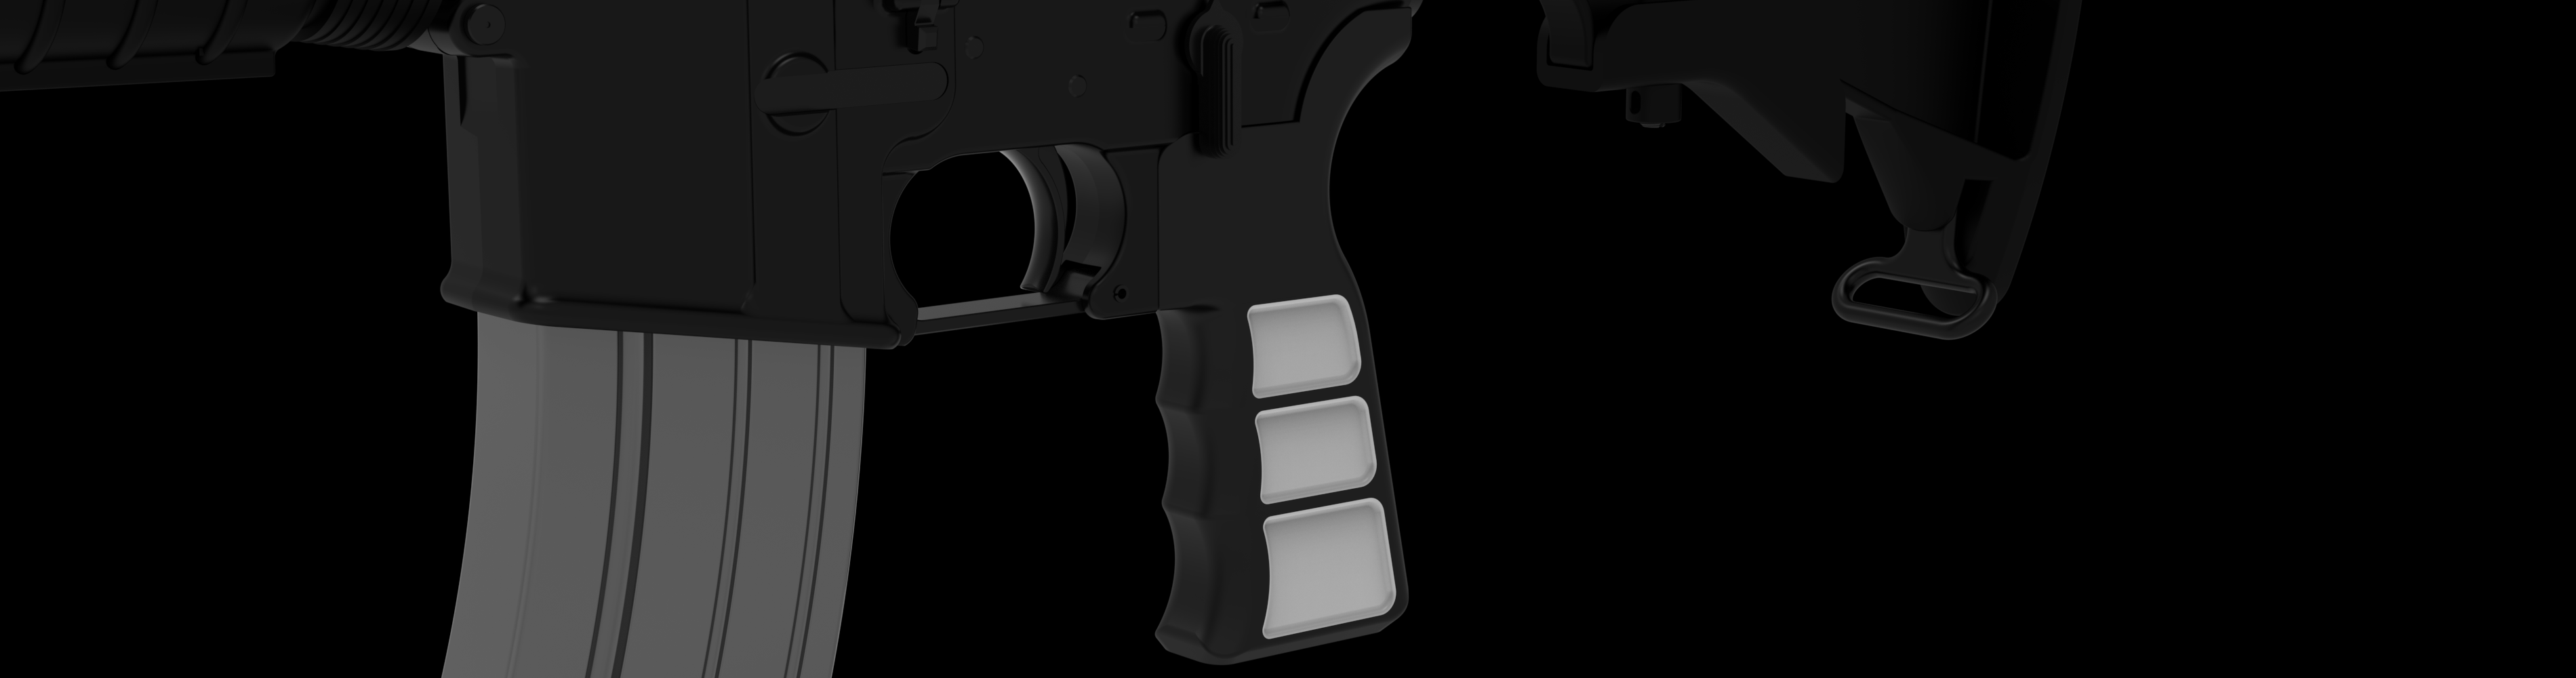 V01D Grip (AR-15) | DEFCAD